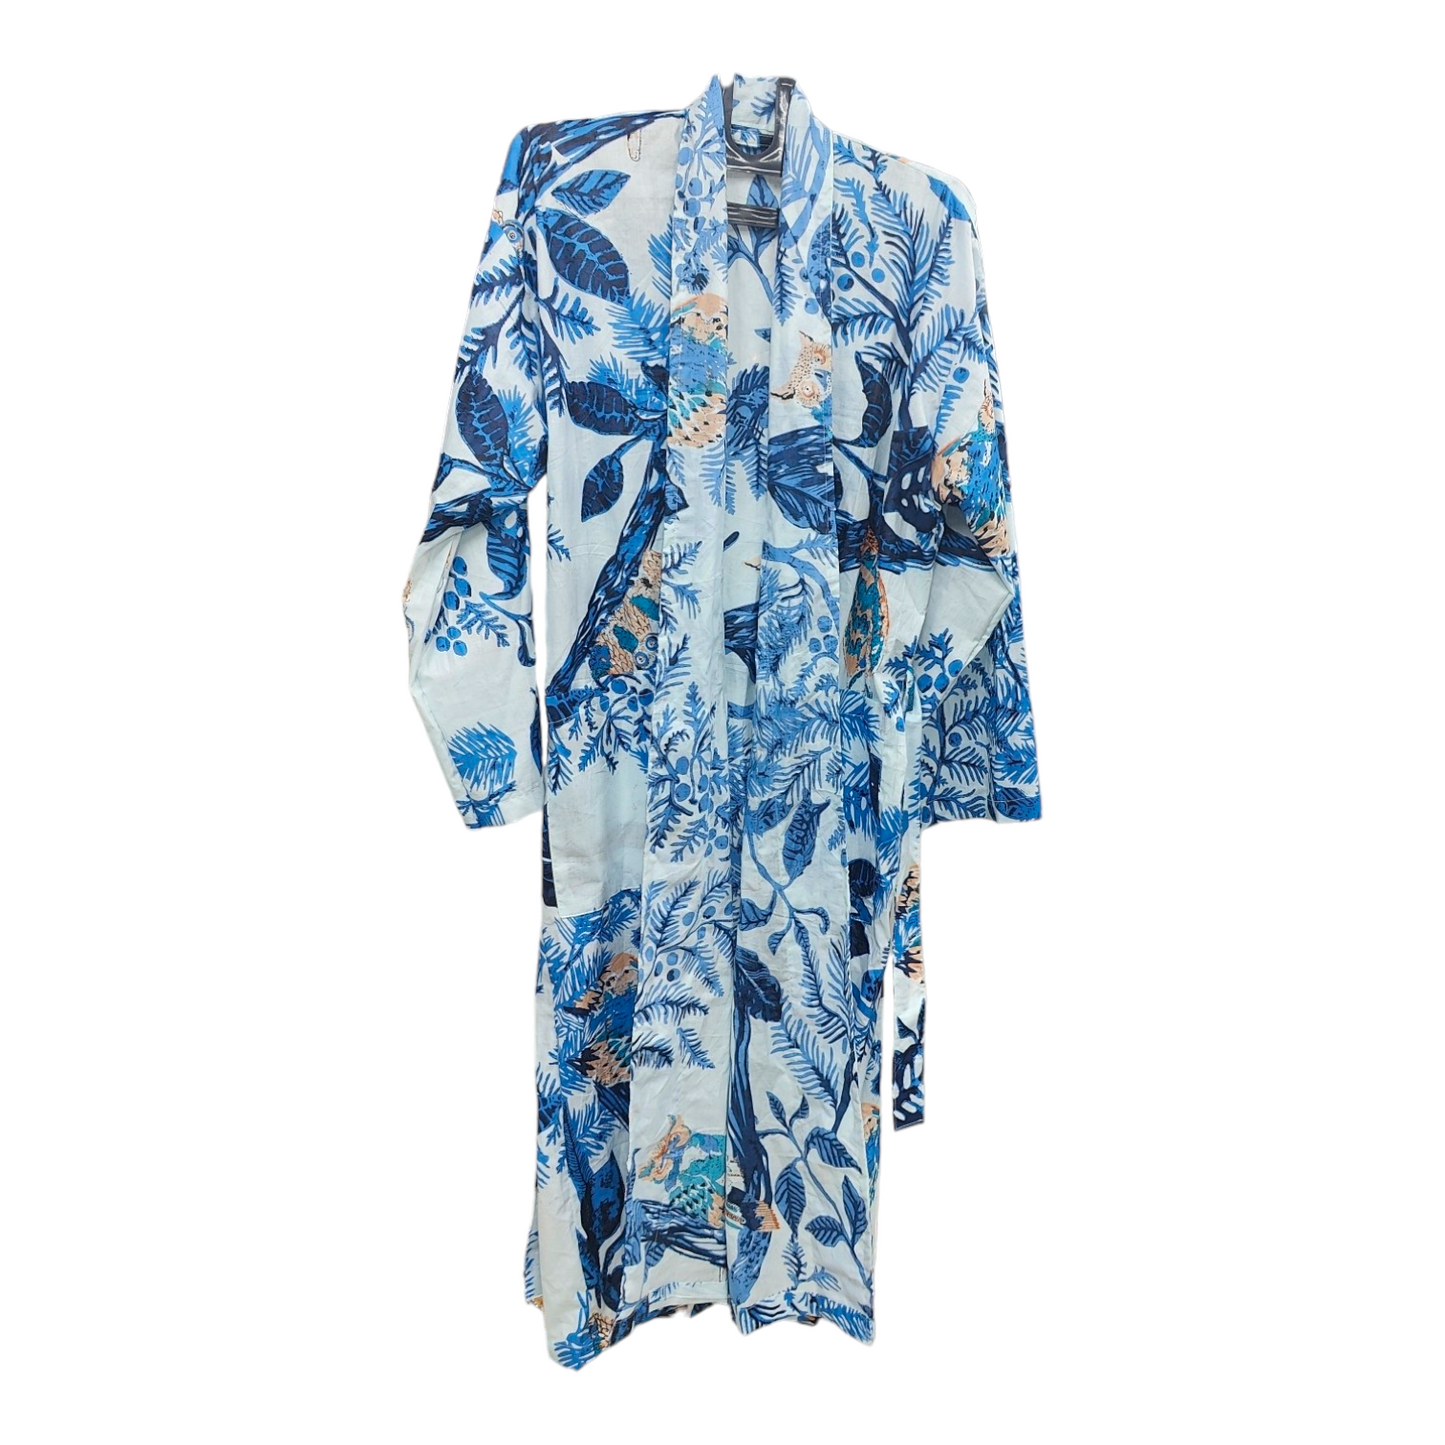 Kimono Bath Robes/ Night Suit - Owl with family Blue